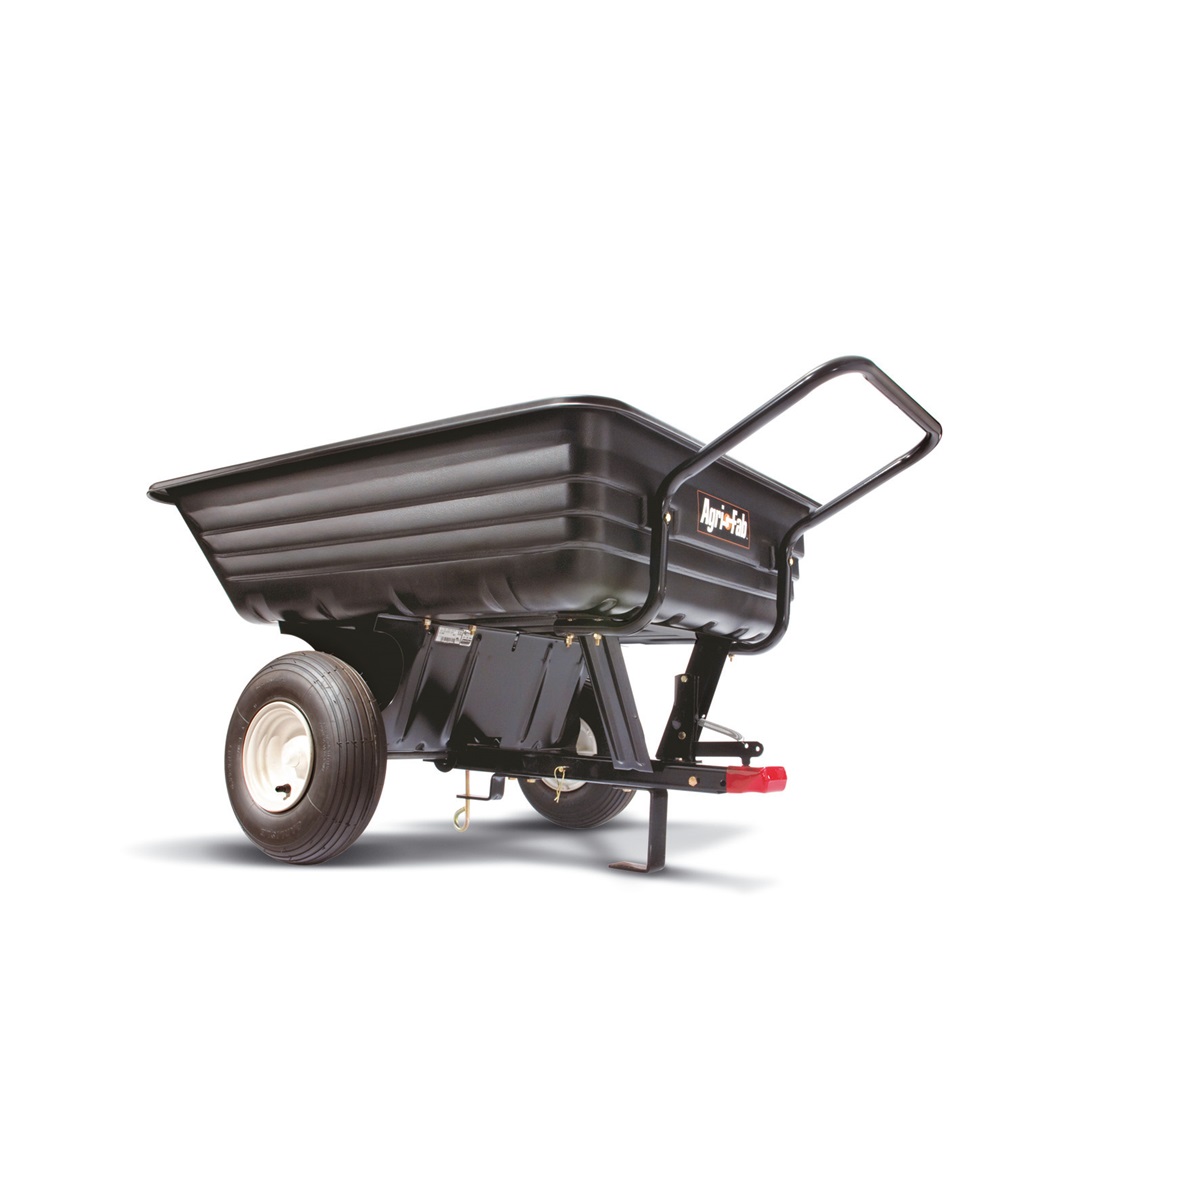 AgriFab AF 236tažený/tlačný vozík s ložnou plochou z polyetylenu